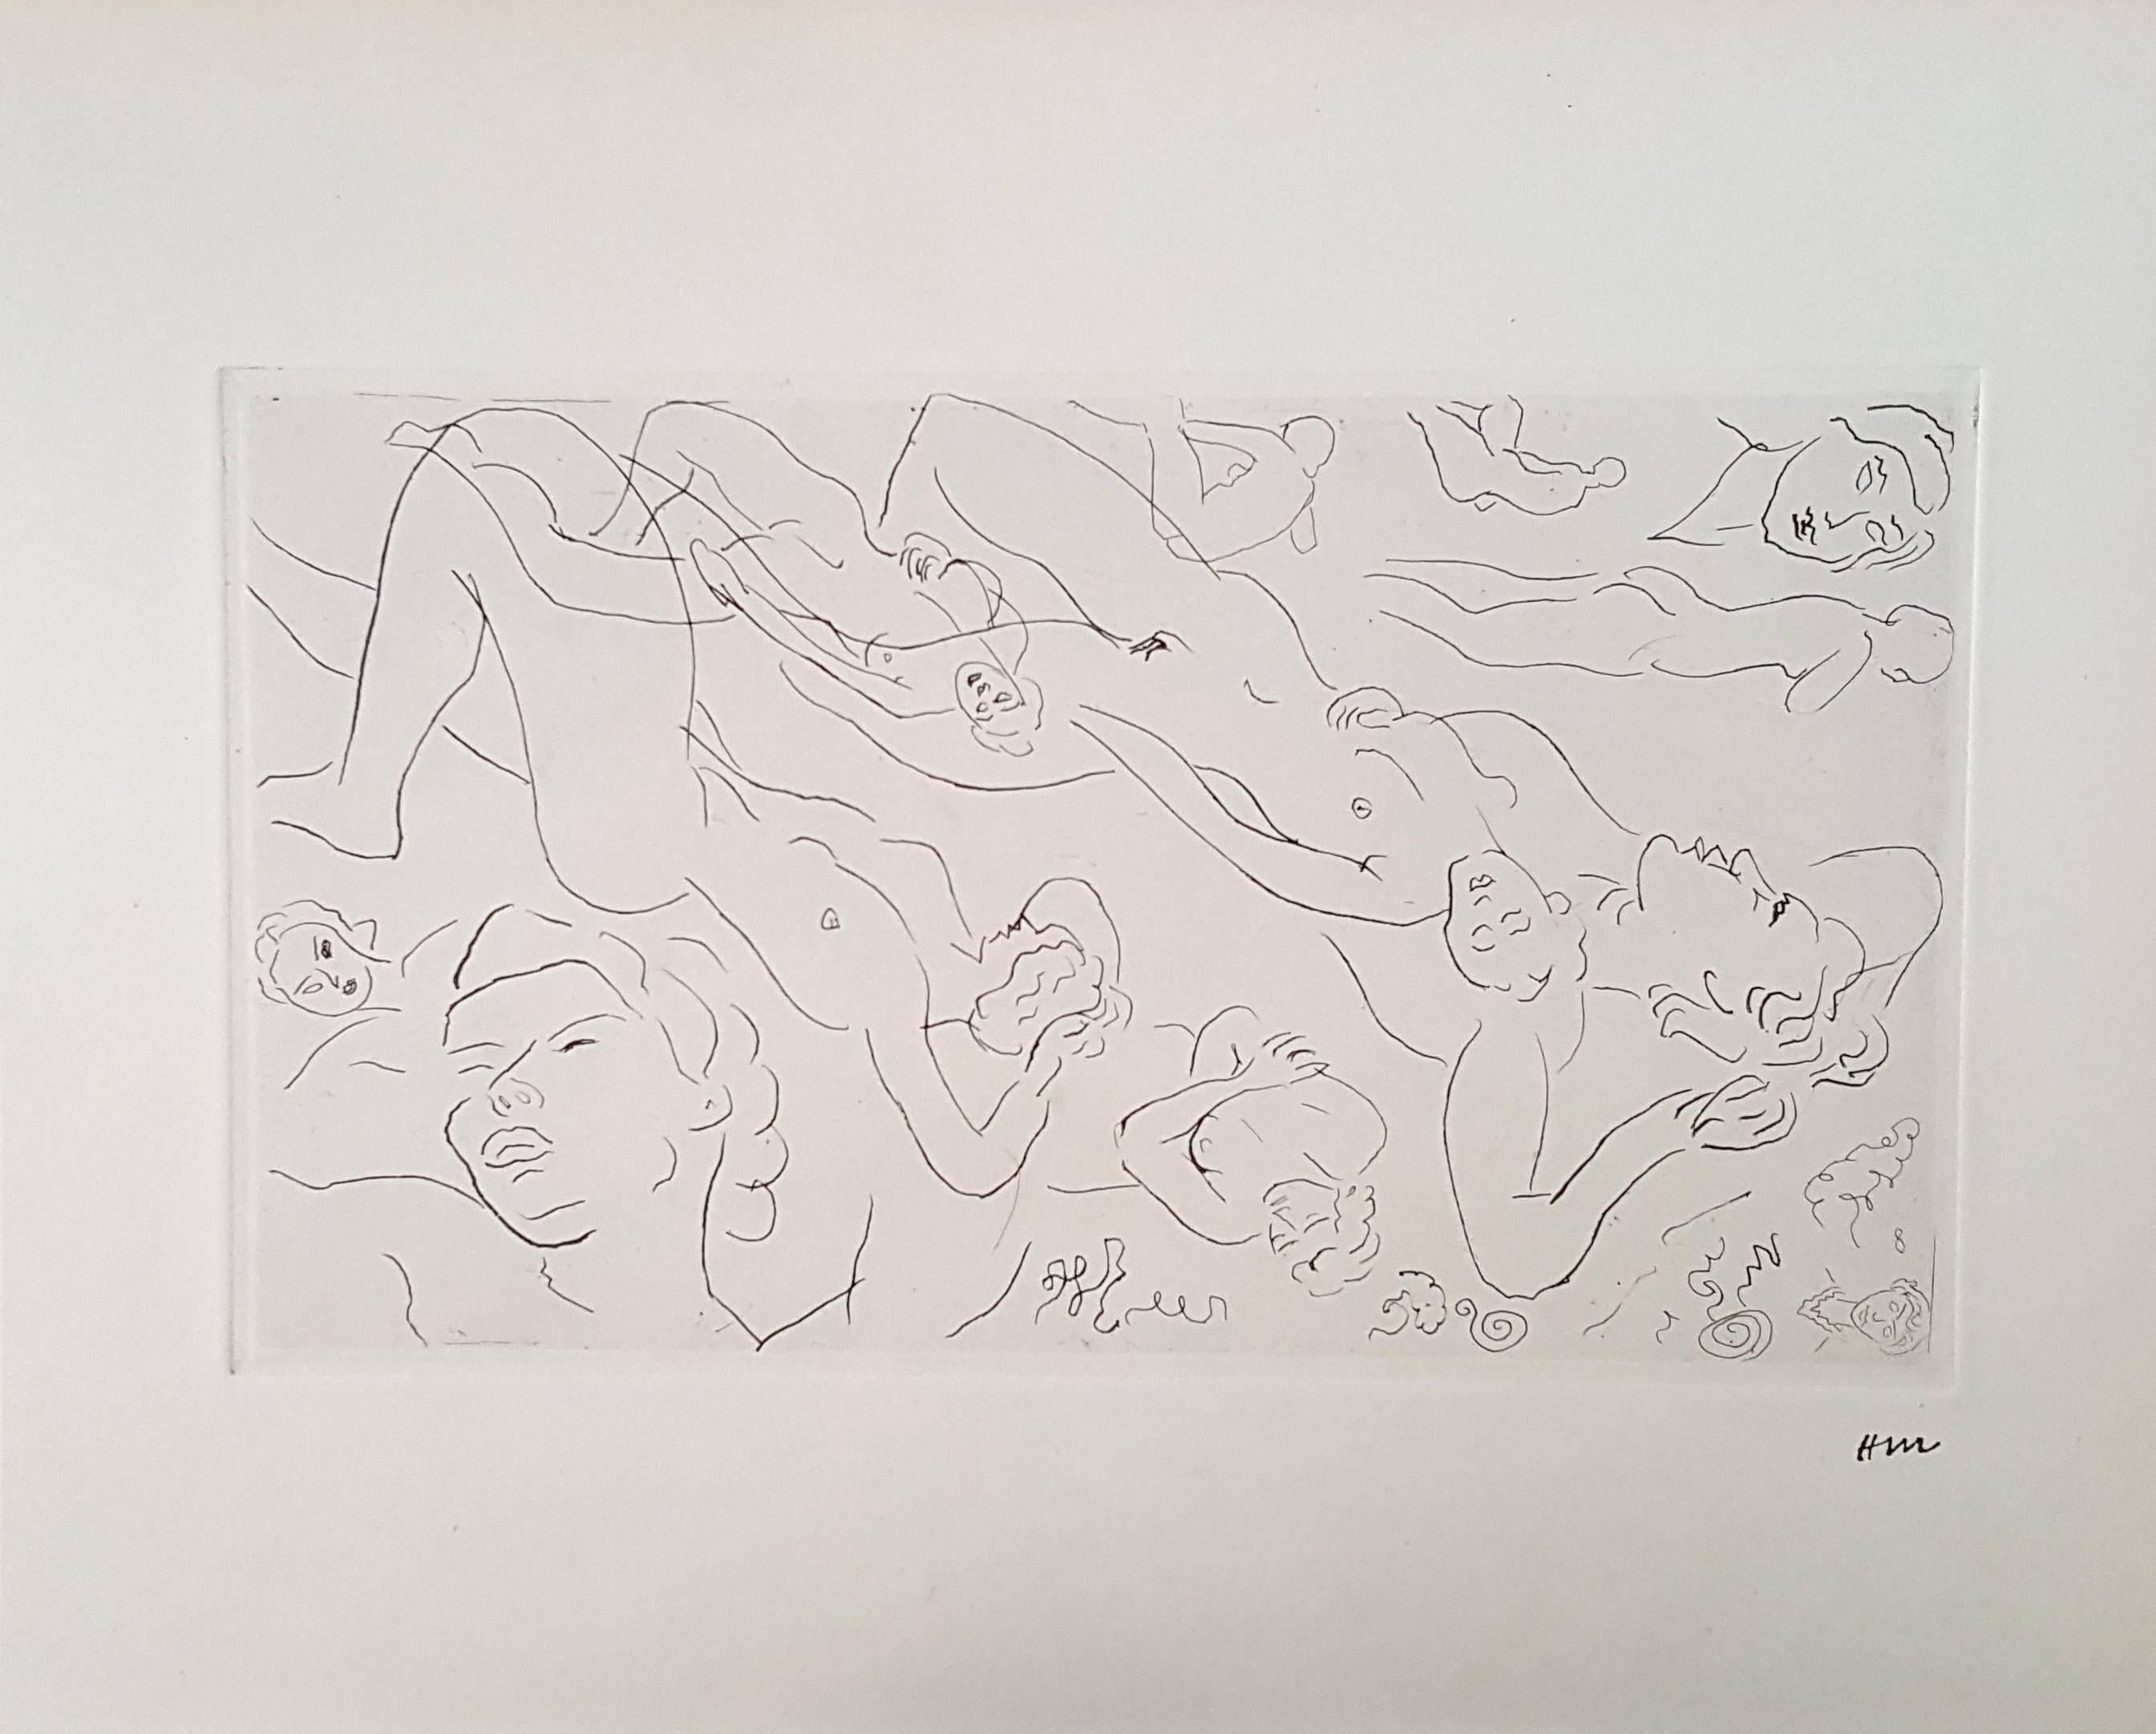 Henri Matisse Figurative Print - Study of Nudes - Original Etching - 125 copies - Stamp Signed